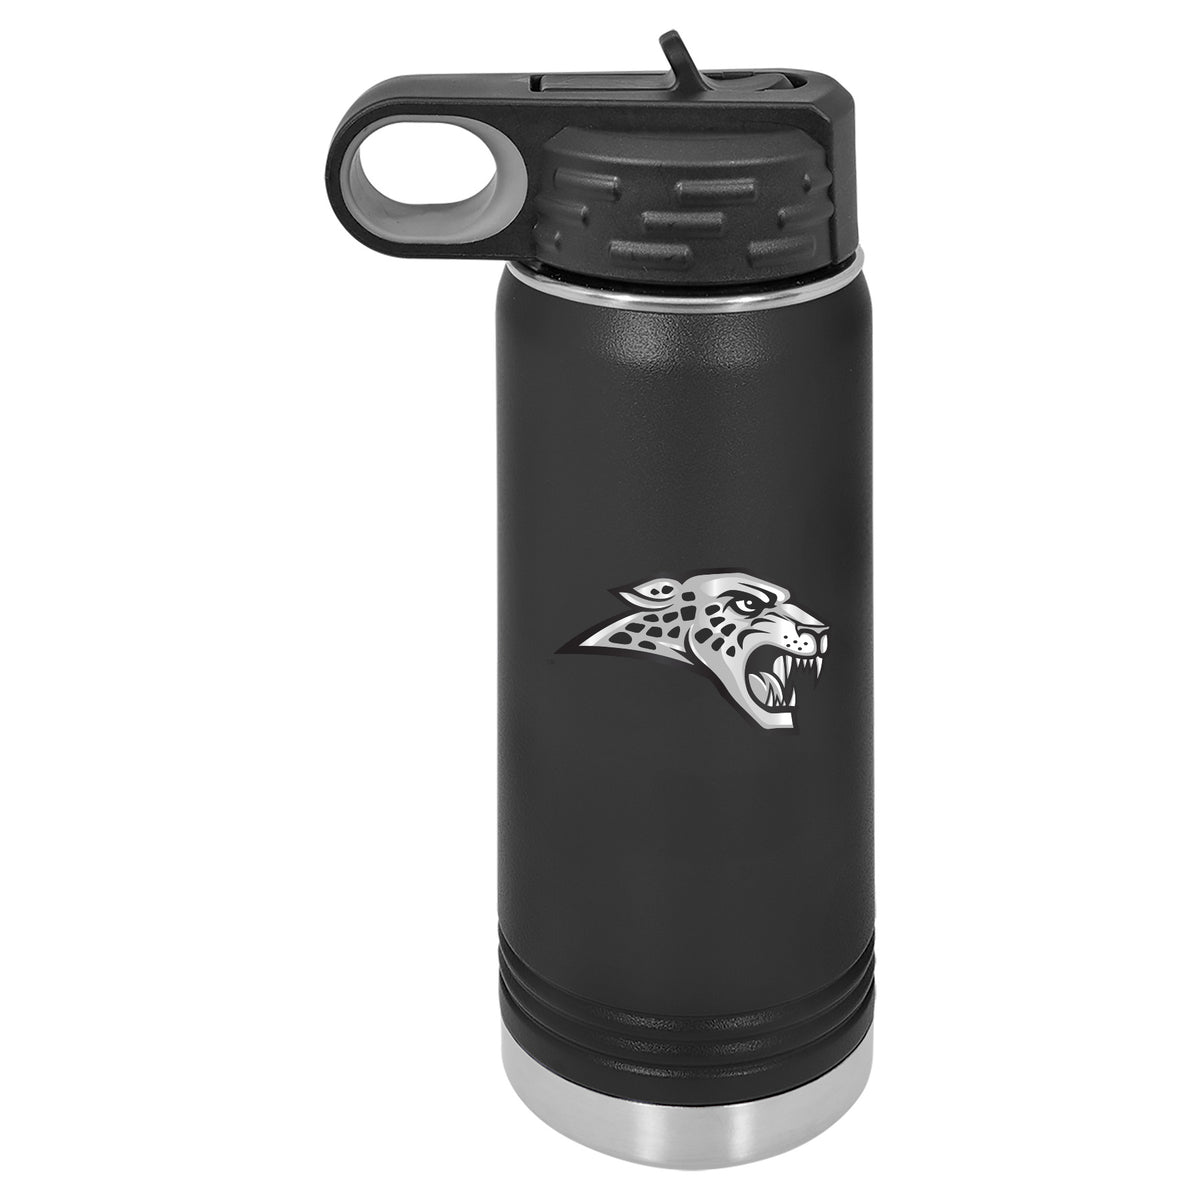 BACK TO SCHOOL Ankeny Centennial Jaguars Jags 20oz. Water Bottle Engraved Stainless Steel Drinkware